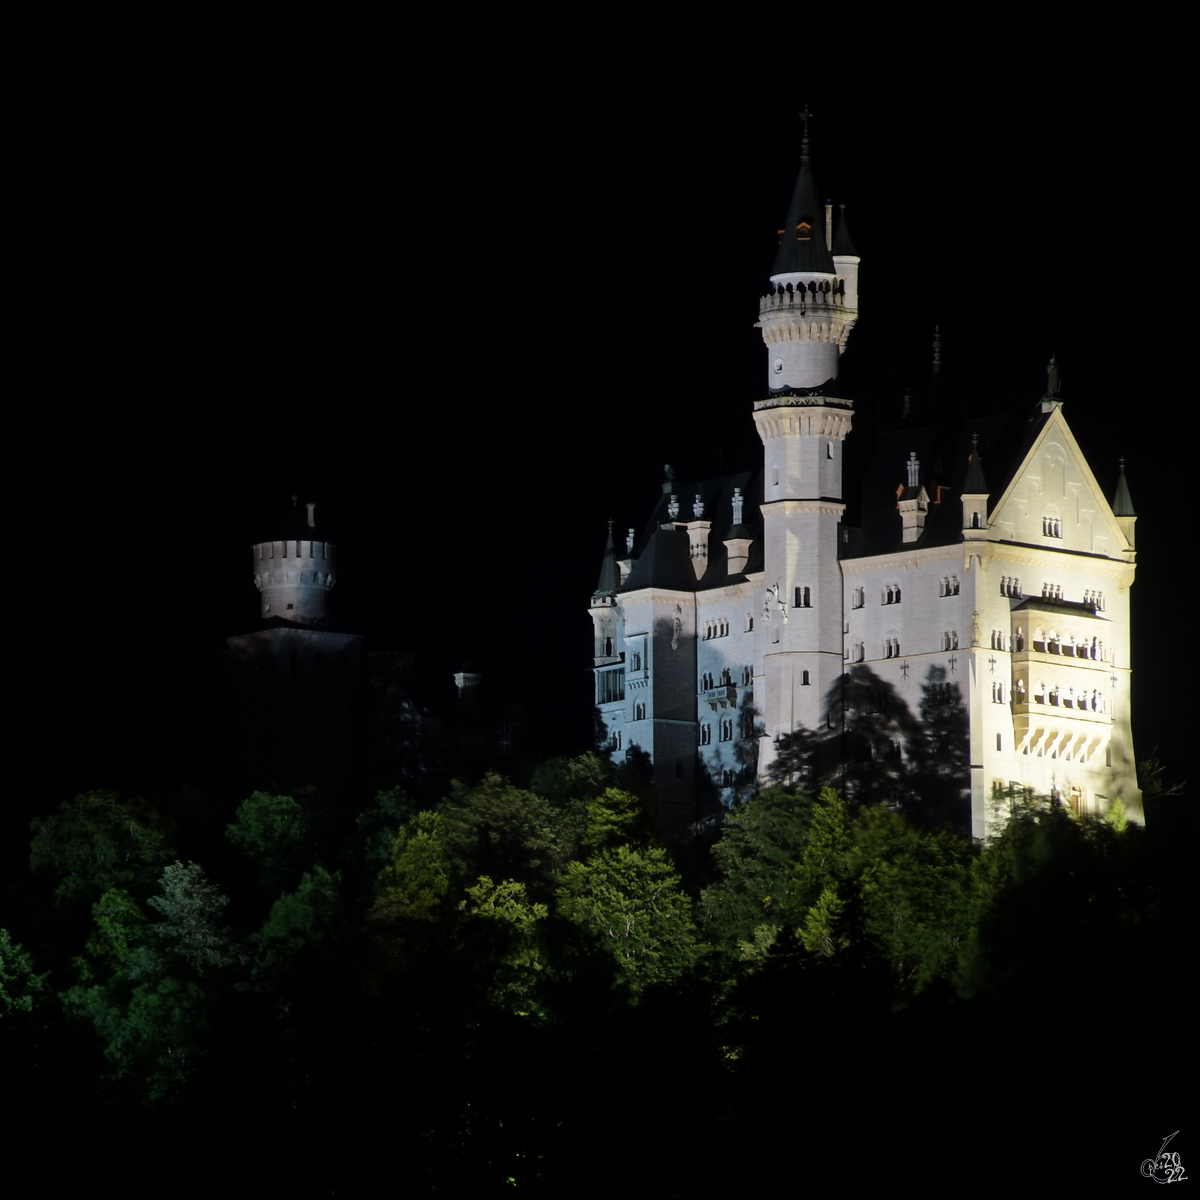 Das Schloss Neuschwanstein bei Nacht. (Hohenschwangau, Juli 2017)